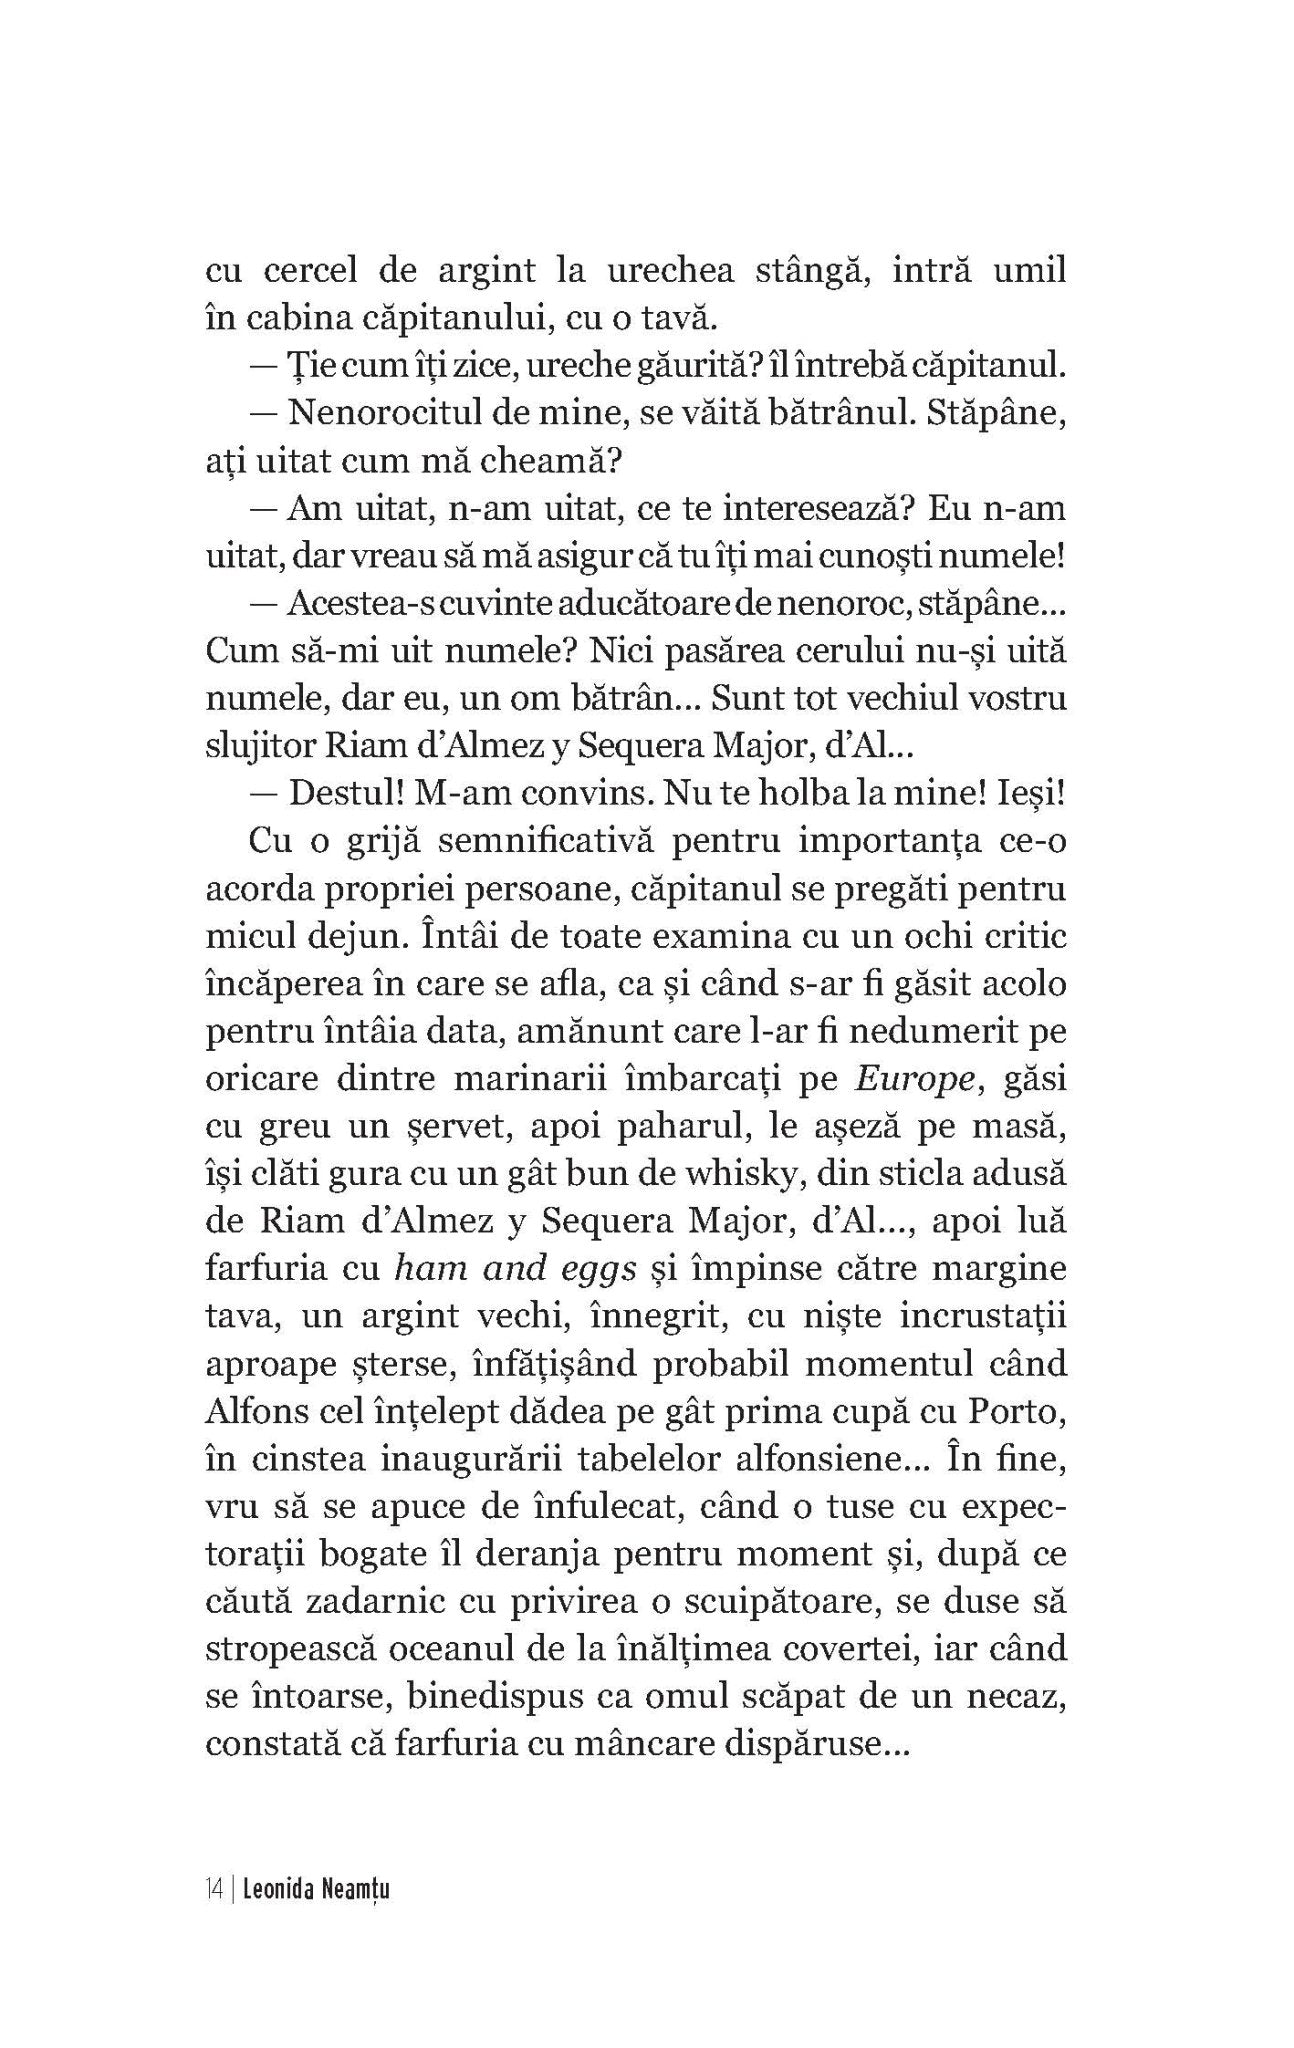 Aventura si contraaventura - Ed. digitala - PDF - Publisol.ro